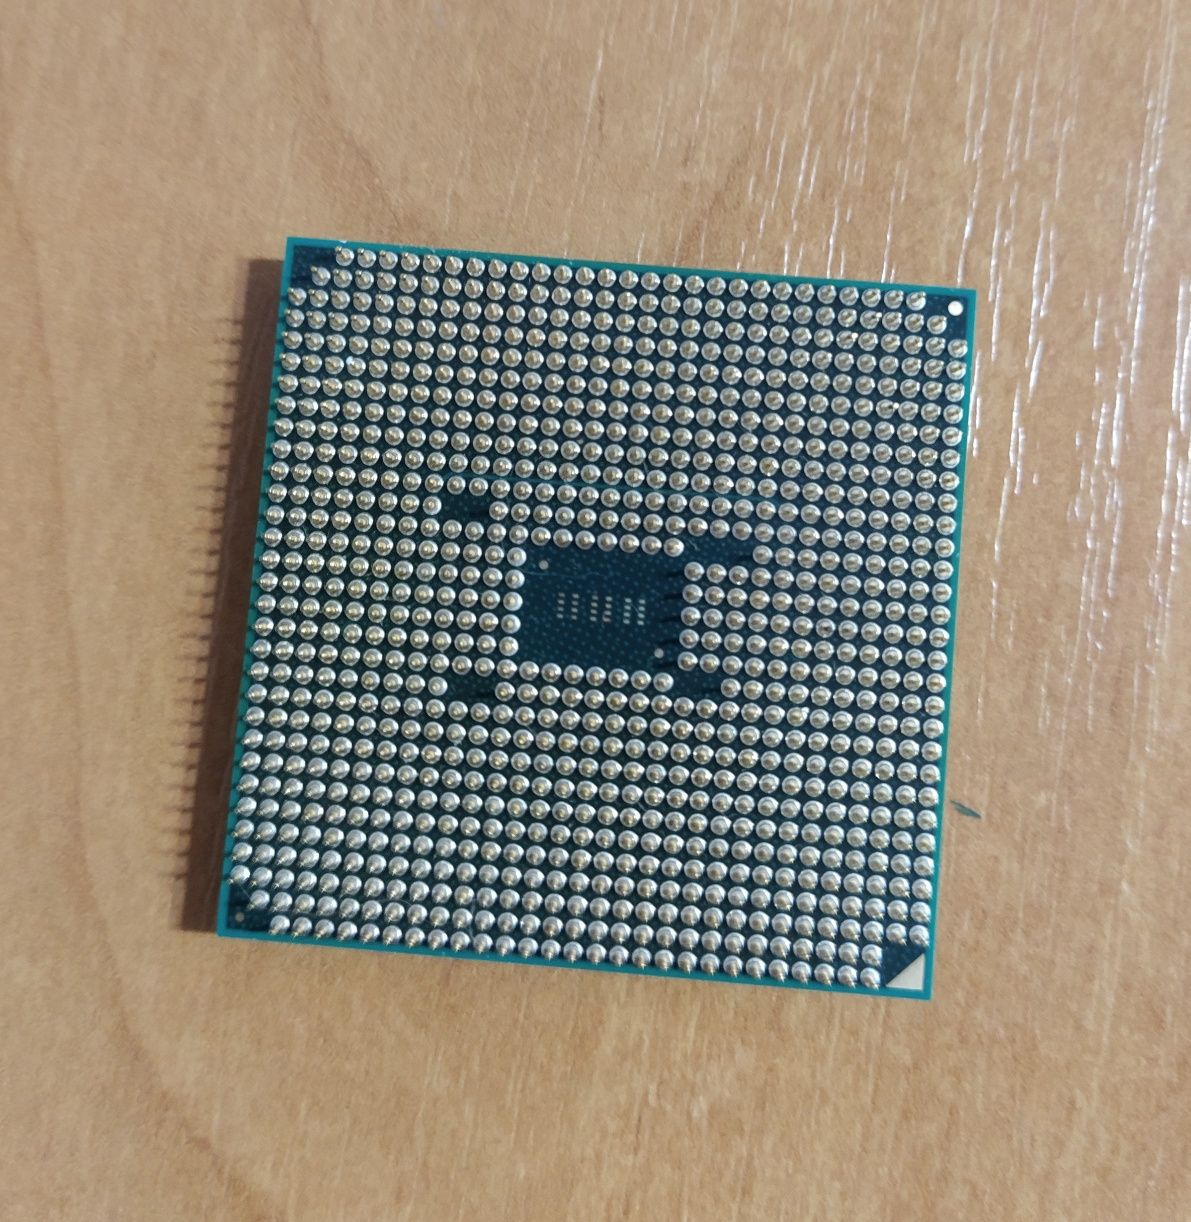 процессор AMD a4-7300